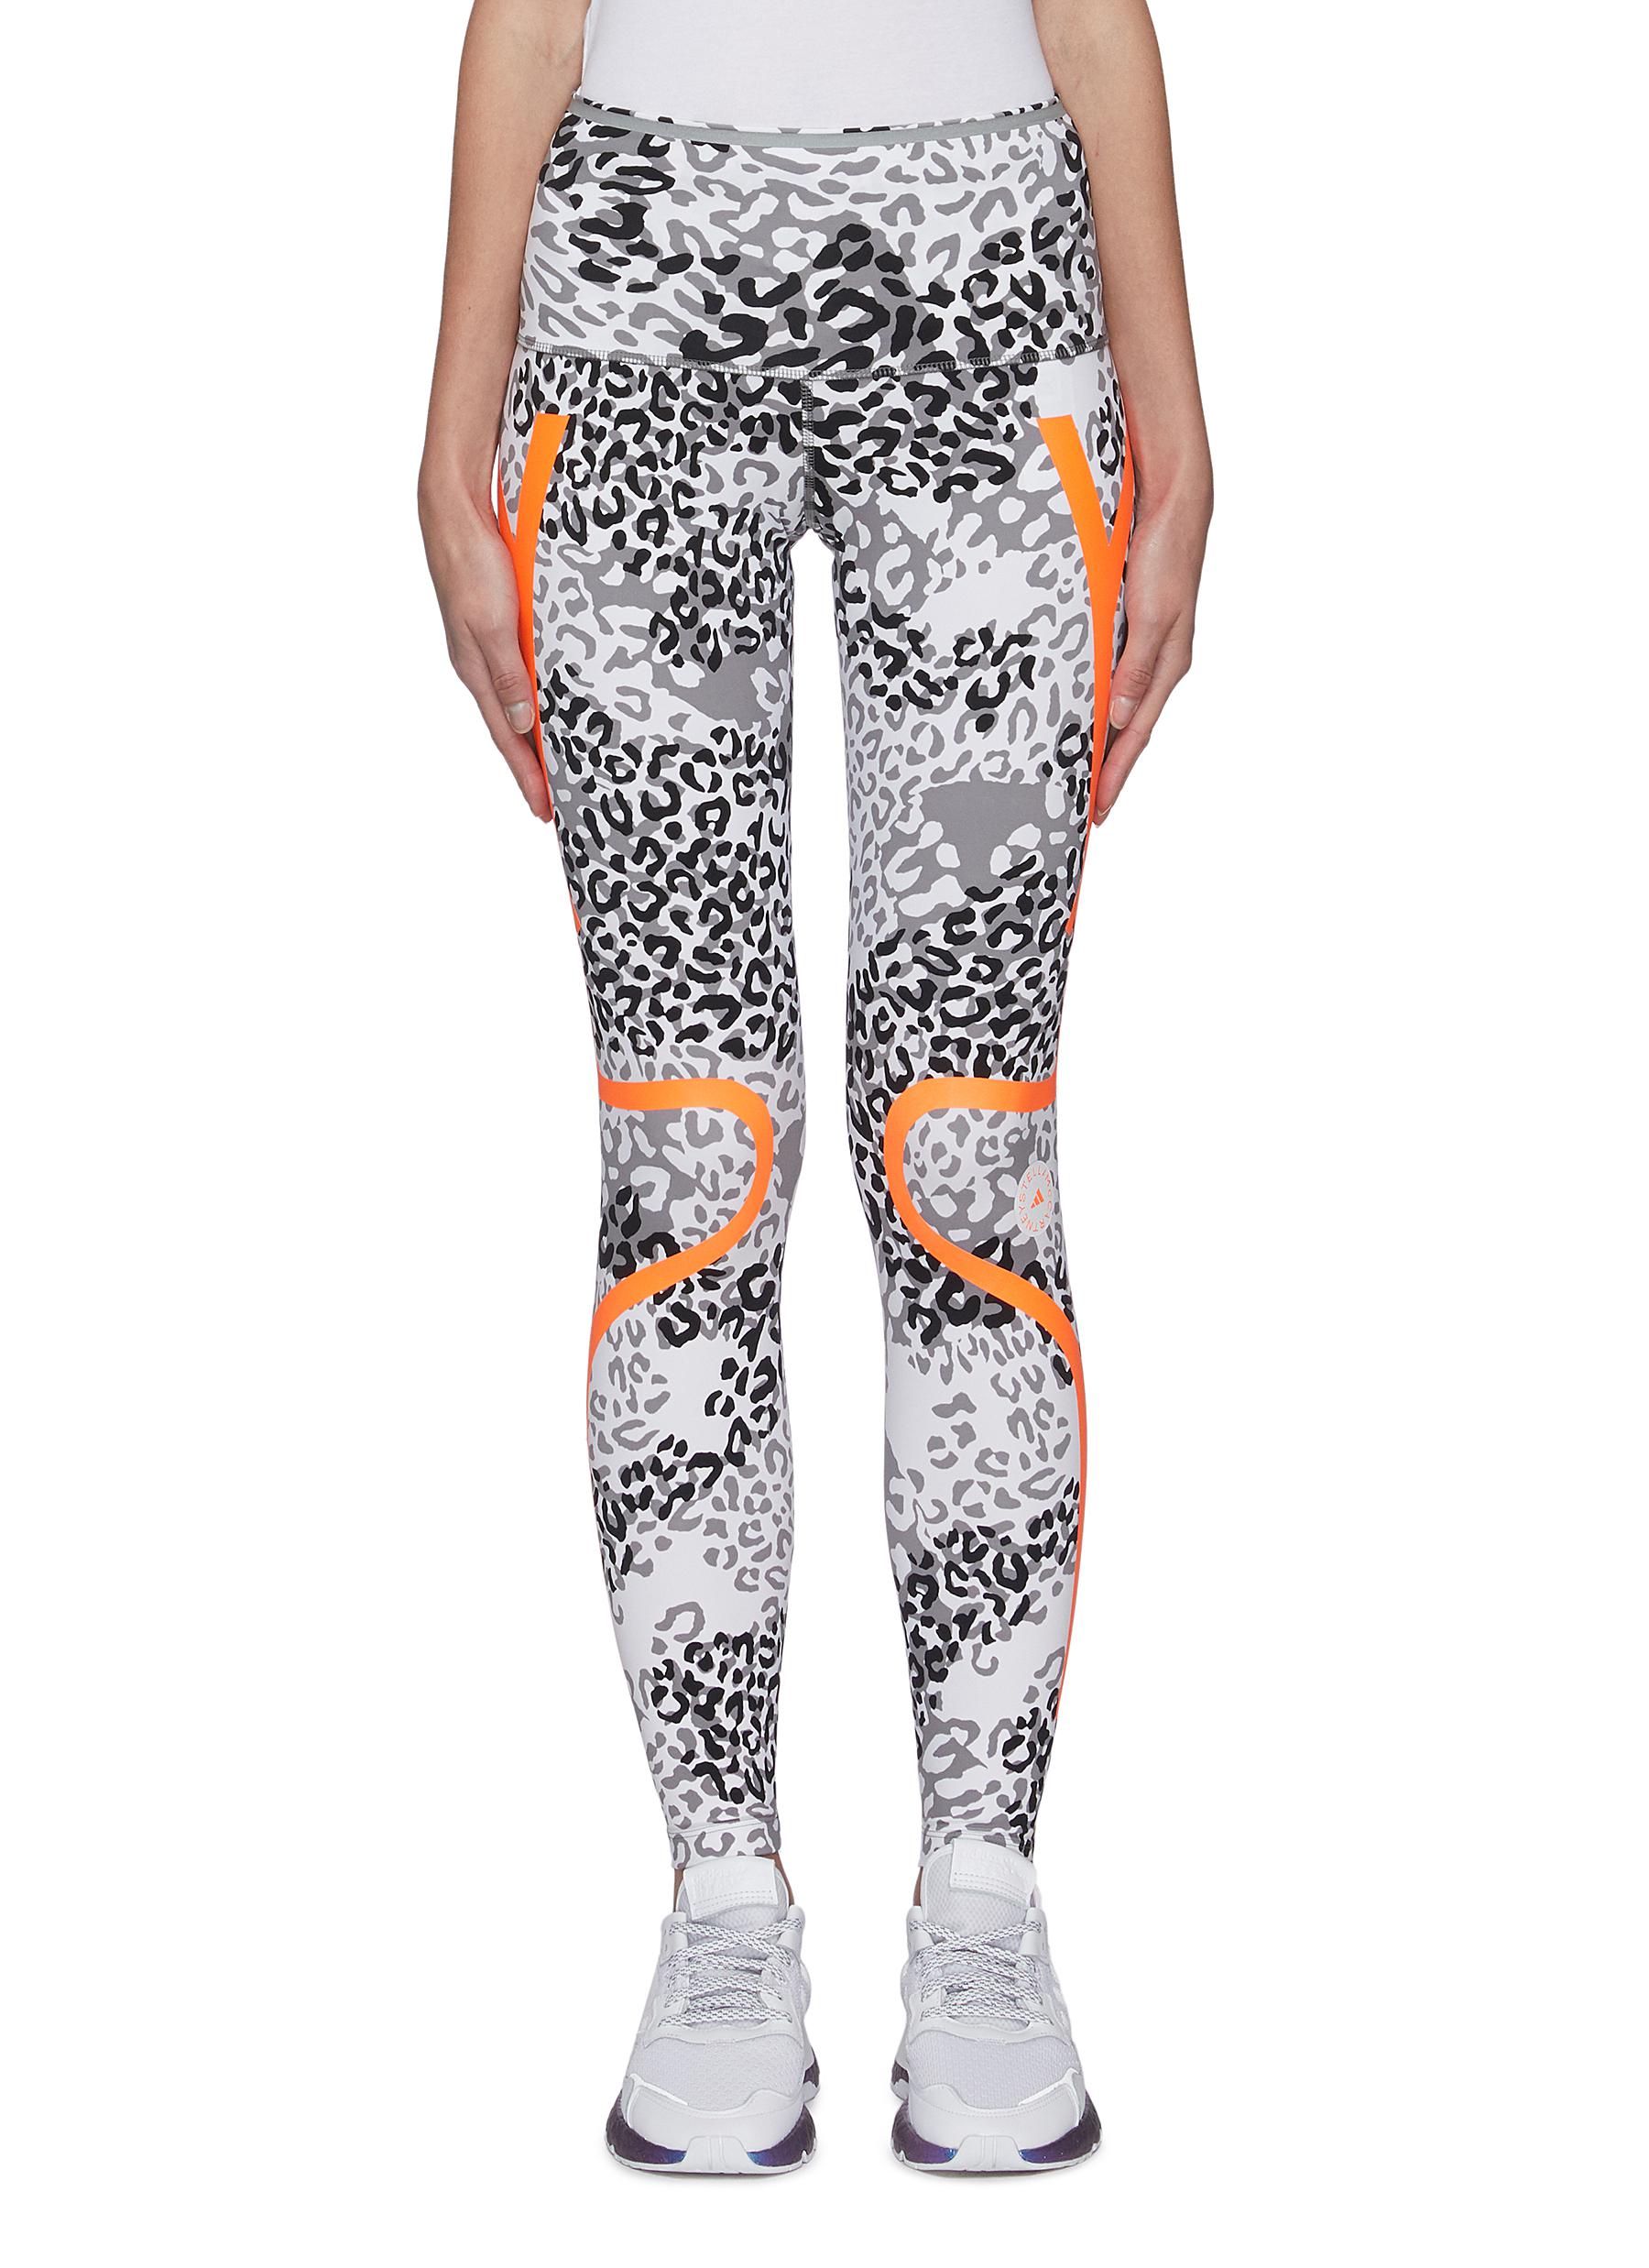 adidas leopard tights